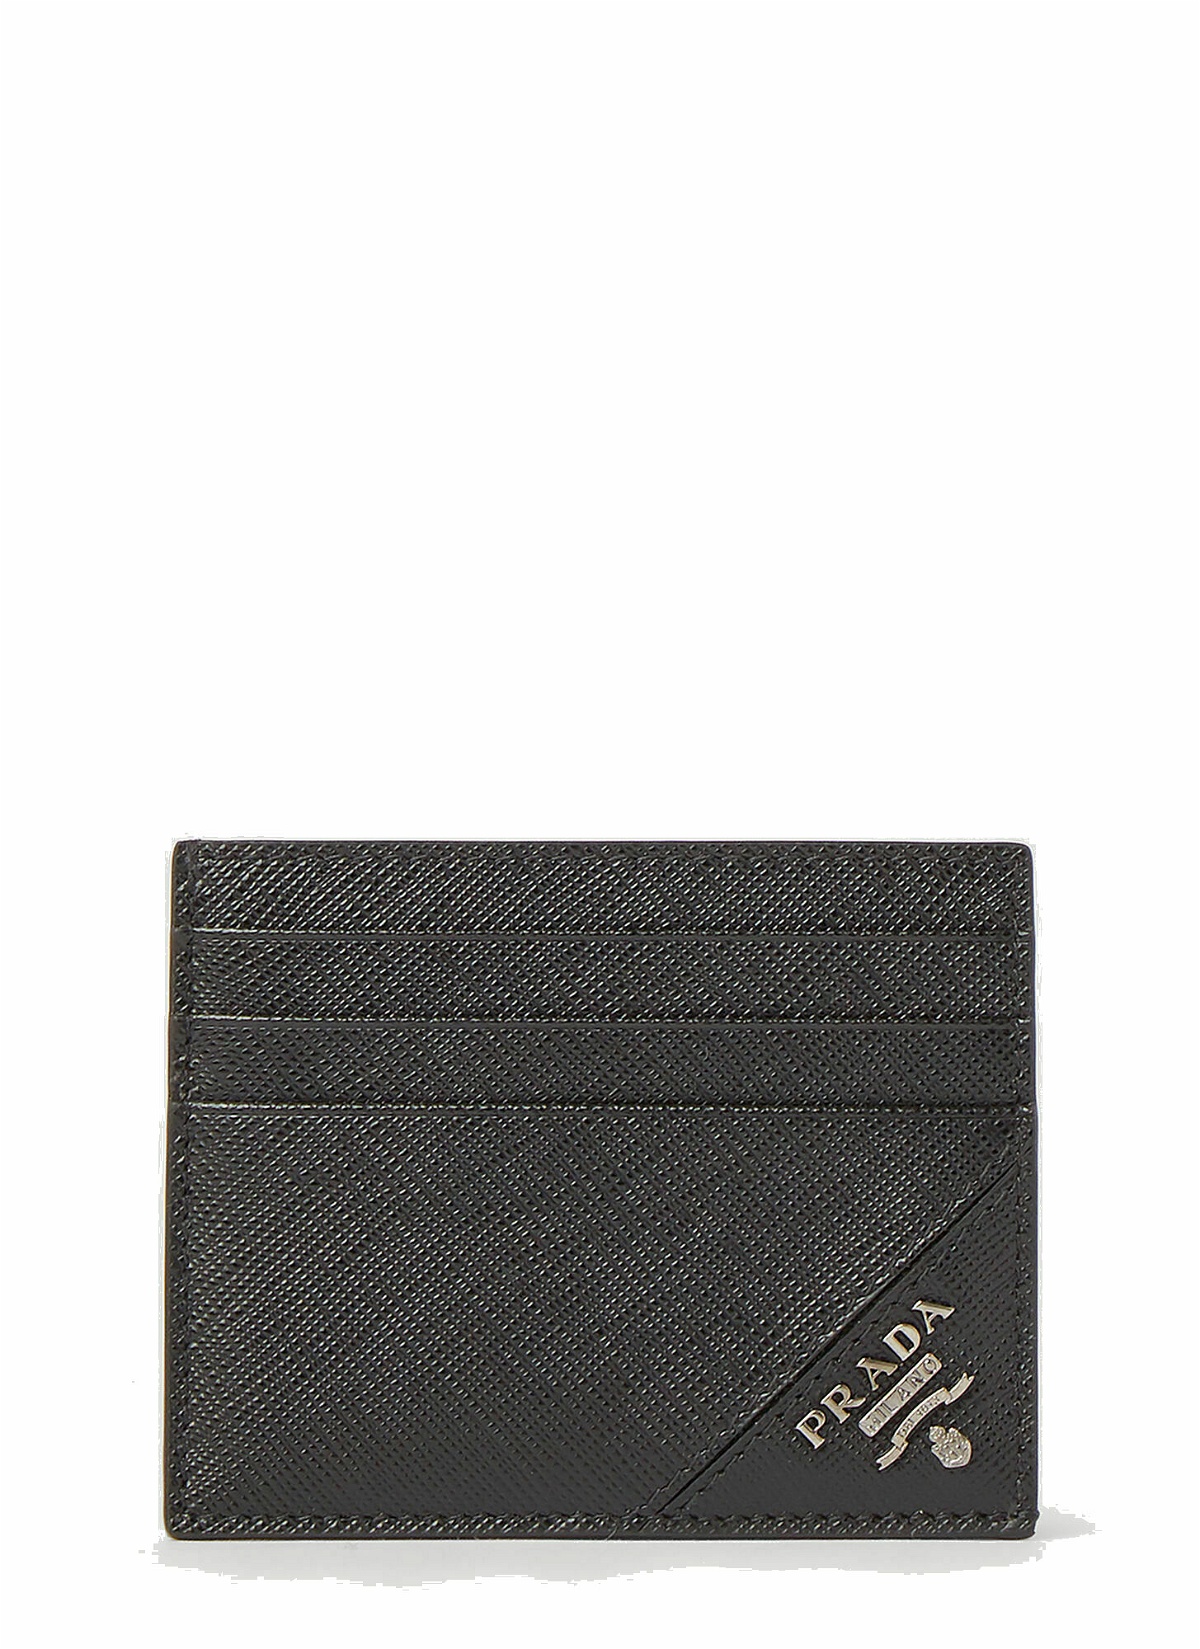 Photo: Prada - Saffiano Leather Card Holder in Black